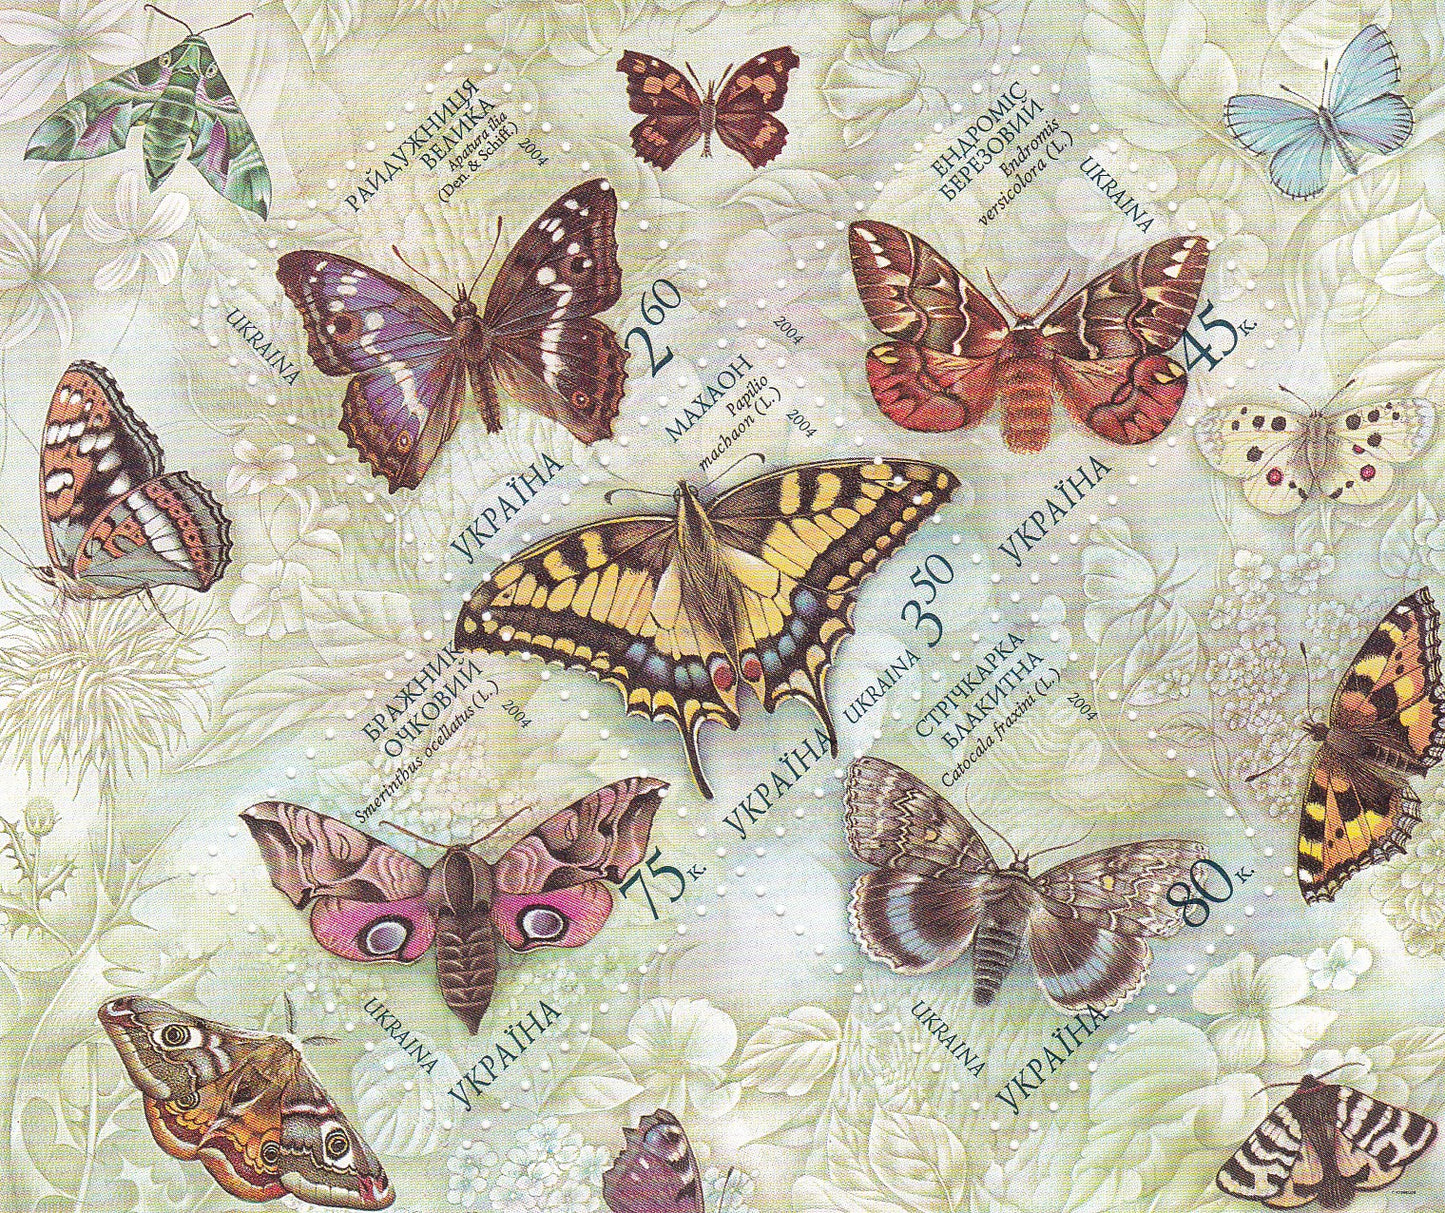 Ukraina Butterflies sheetlet stamps